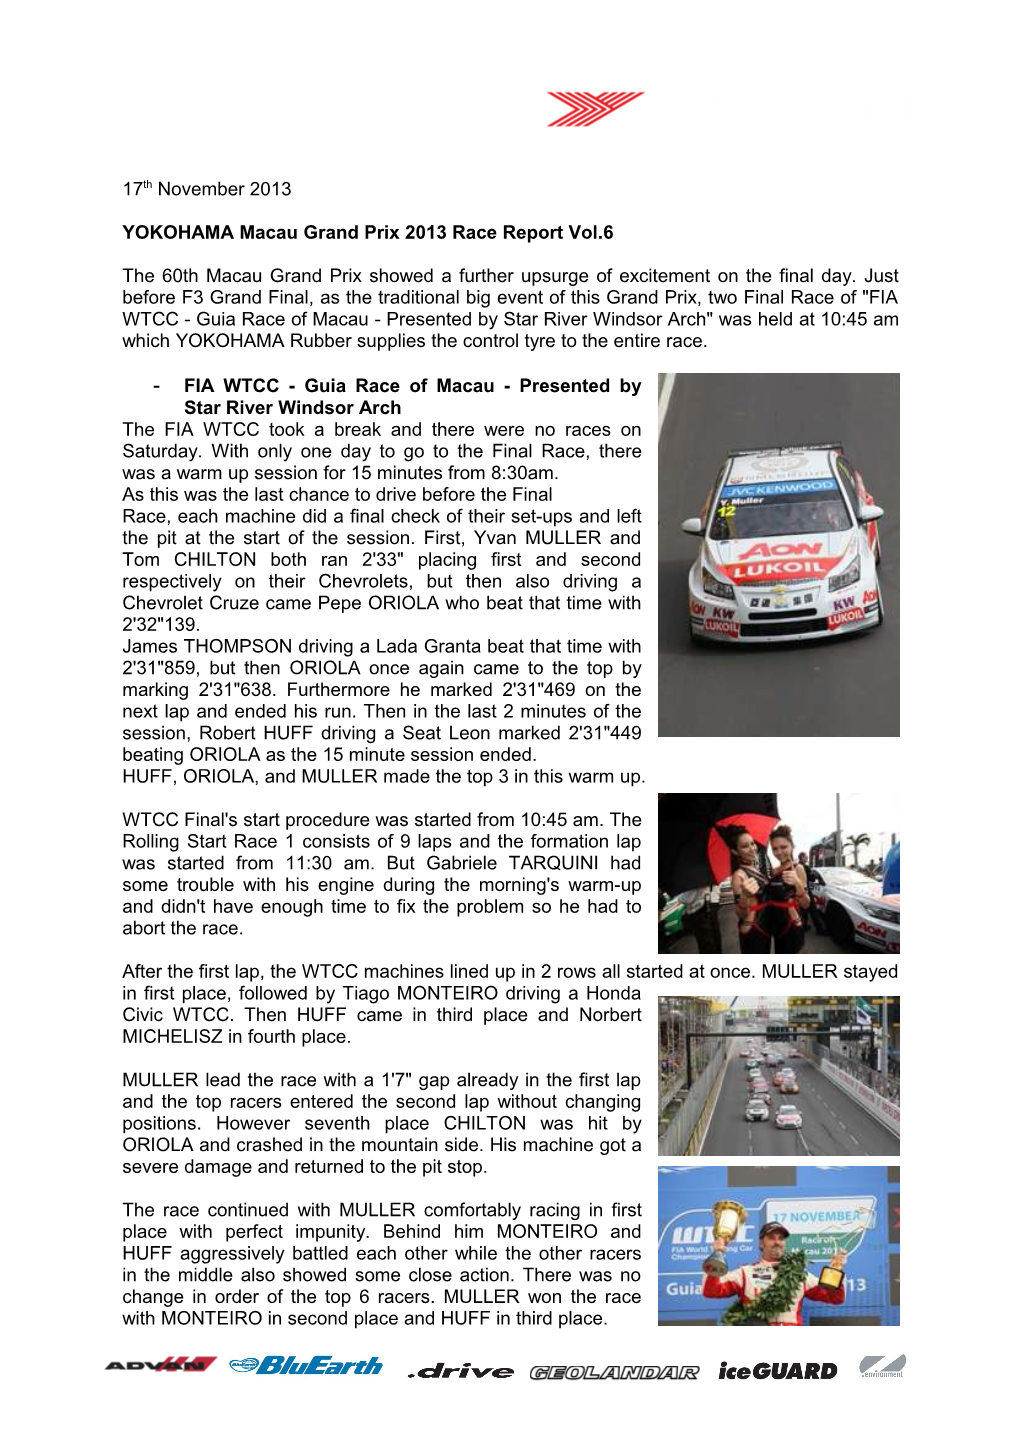 YOKOHAMA Macau Grand Prix 2013 Race Report Vol.6